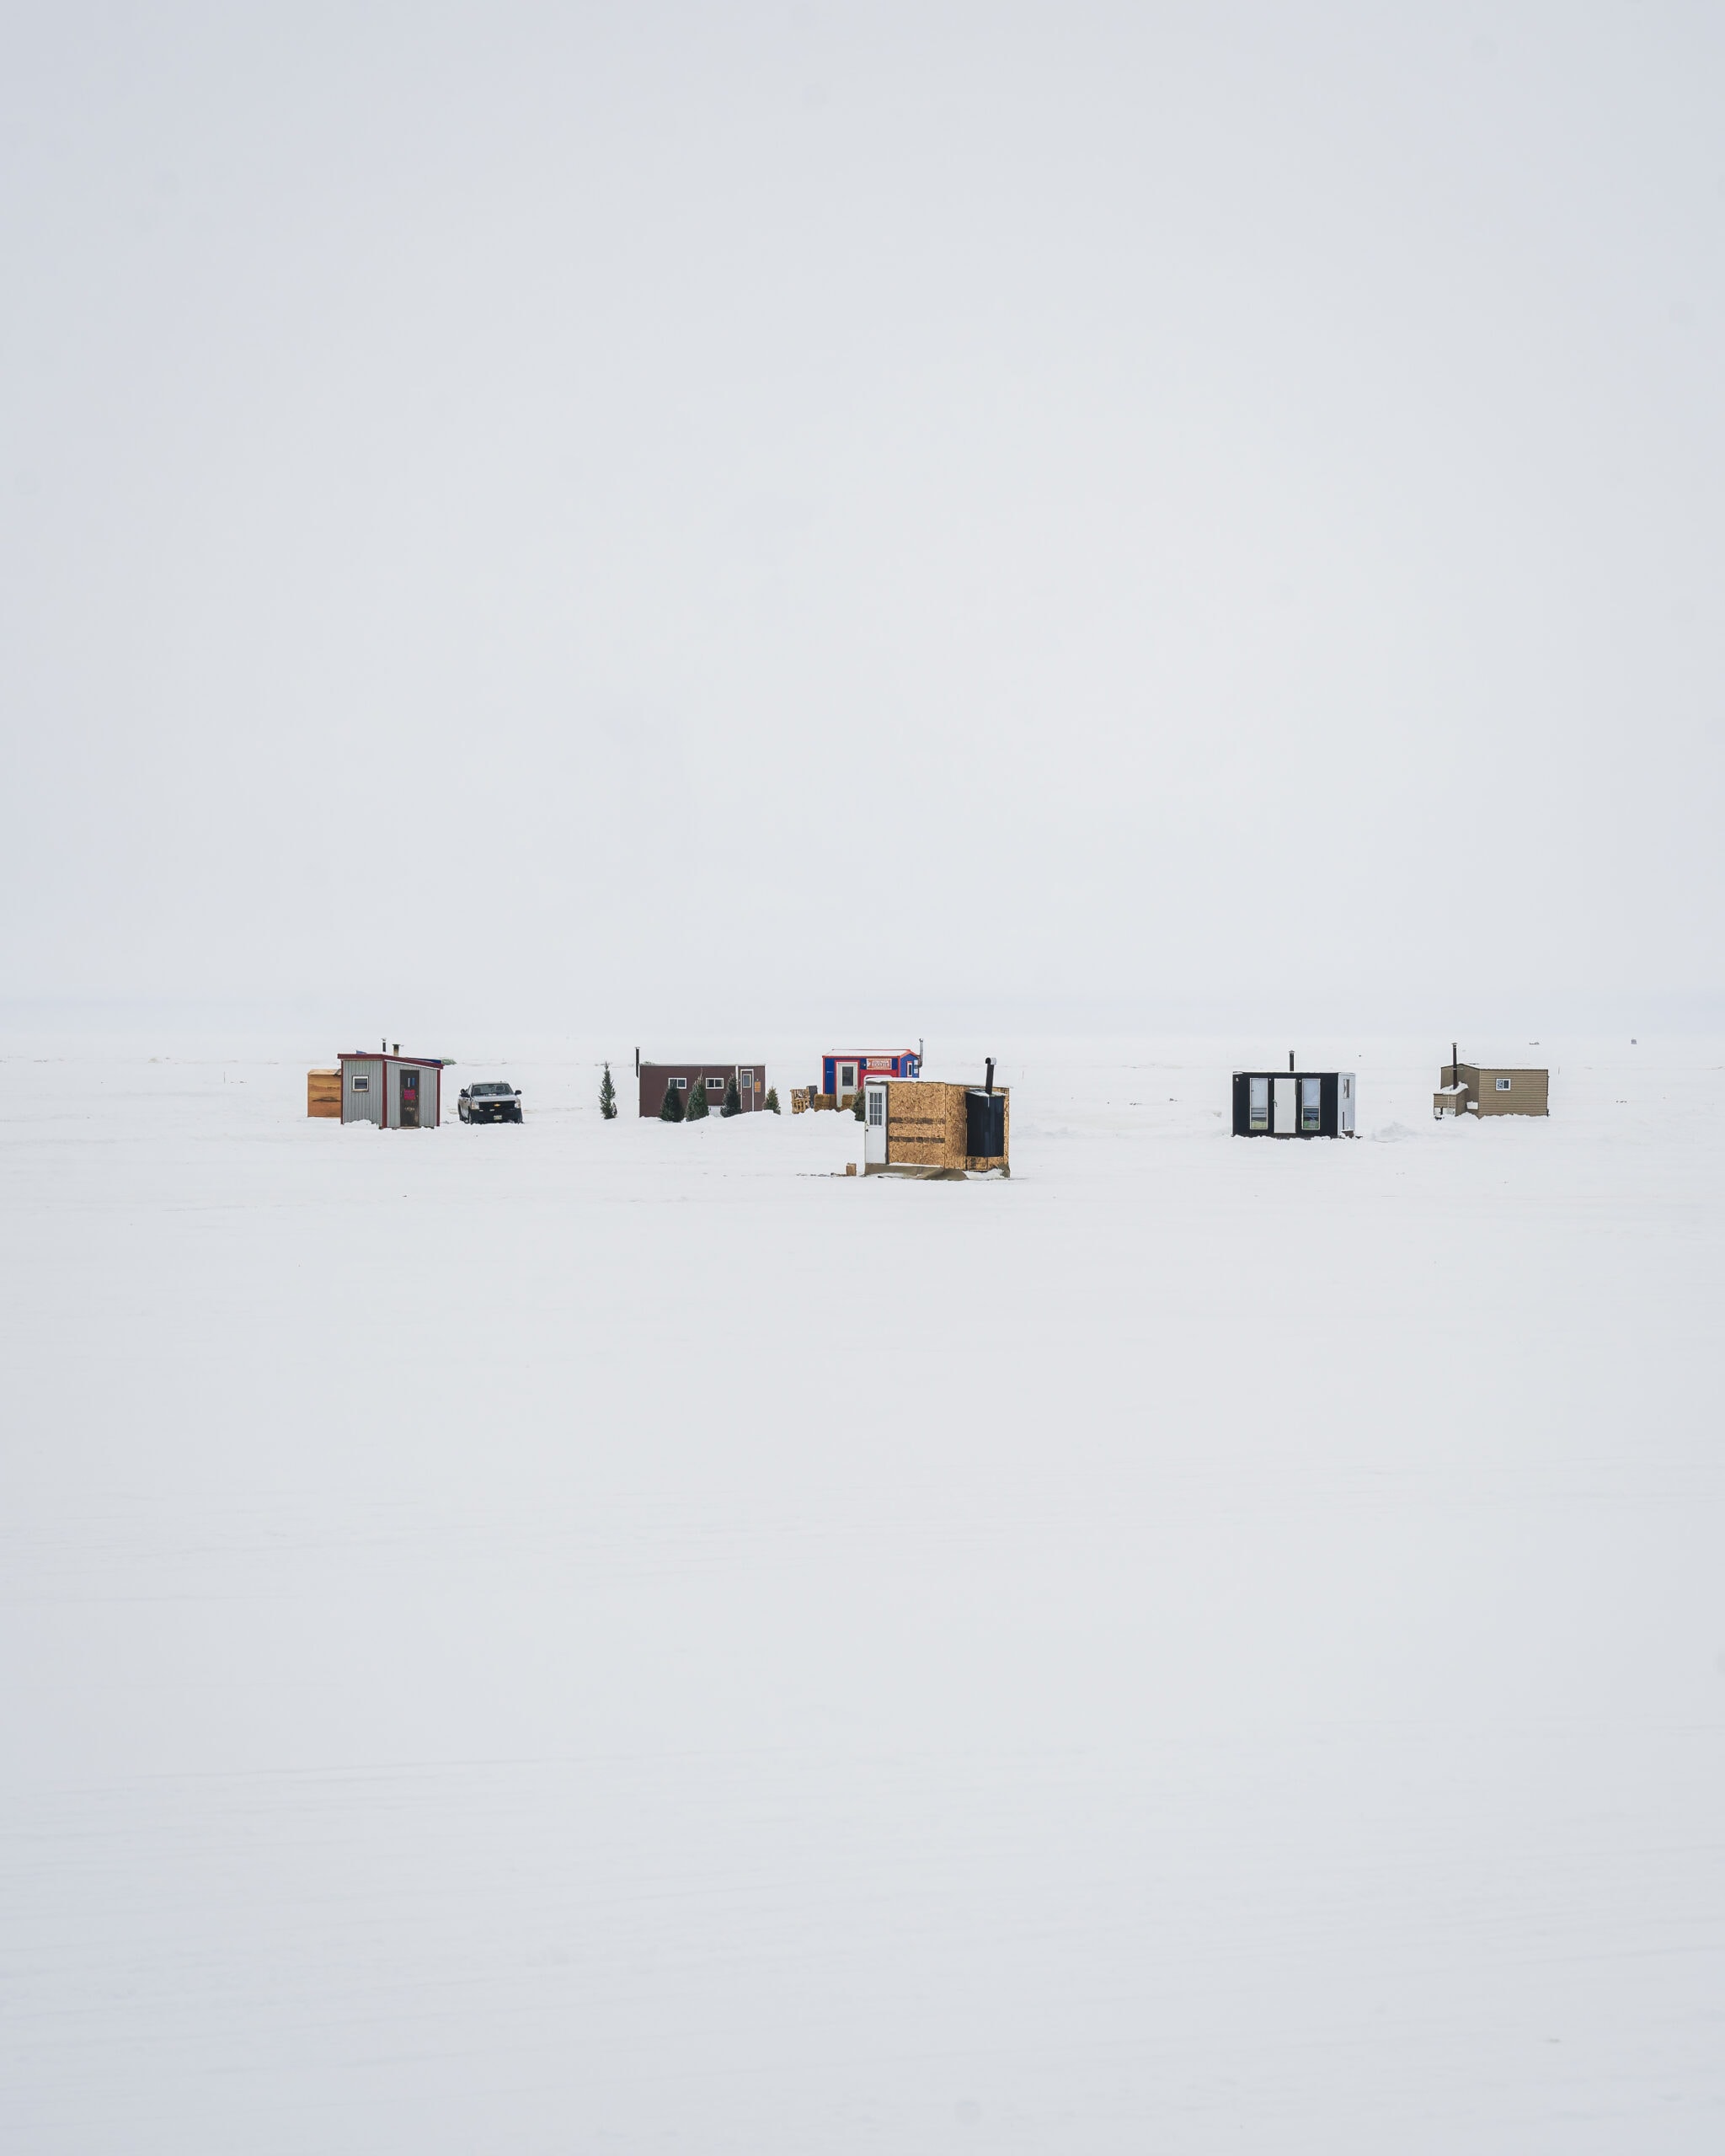 Gimli ice fishng shacks on Lake Winnipeg